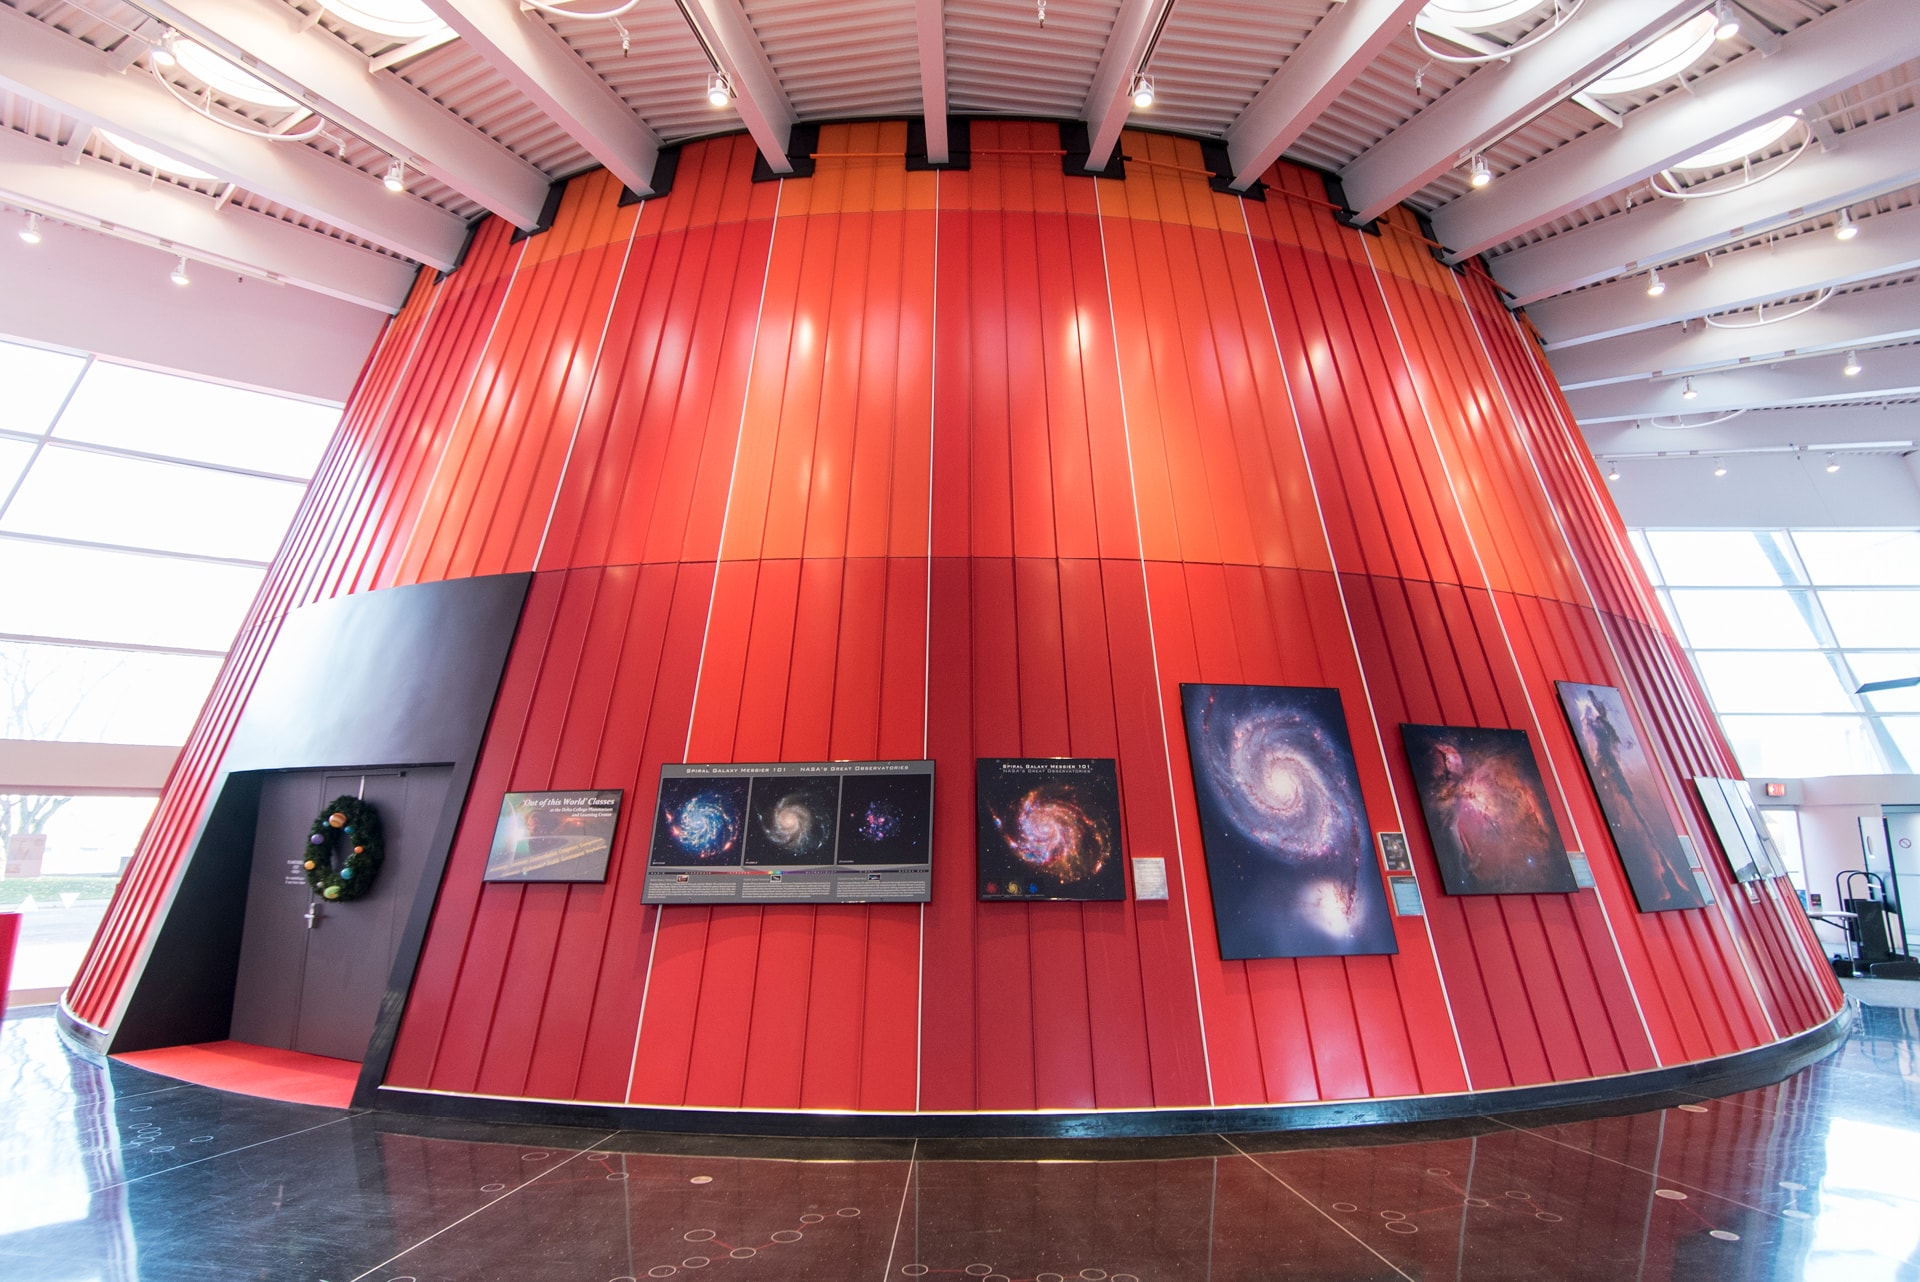 report writing on visit to planetarium